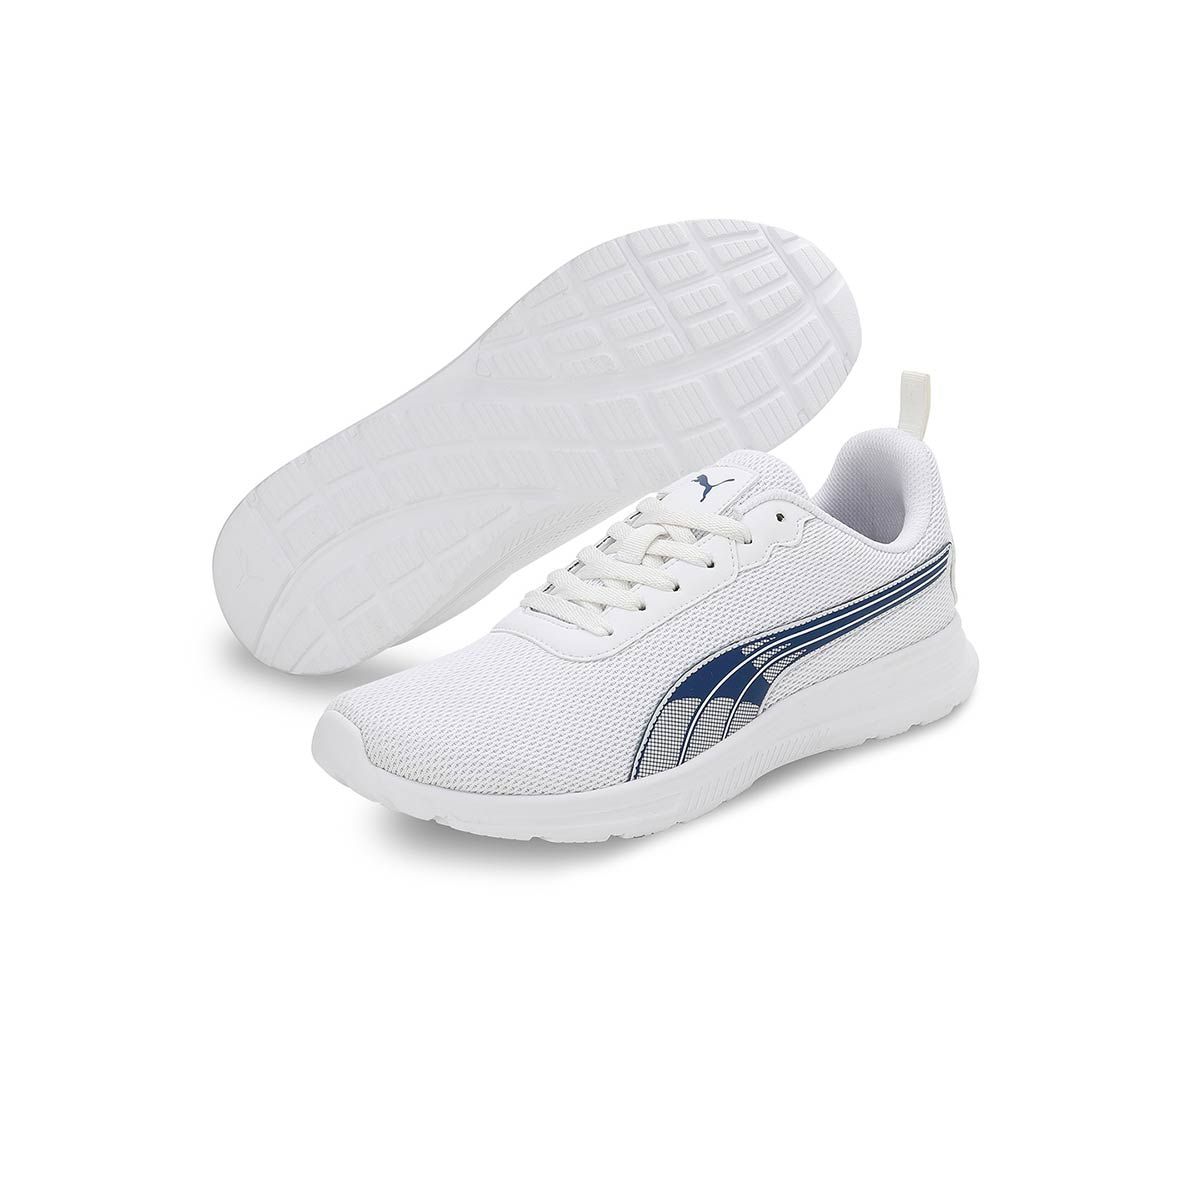 Lakai Essex Skate Shoes - Blueberry Suede | SkateHut